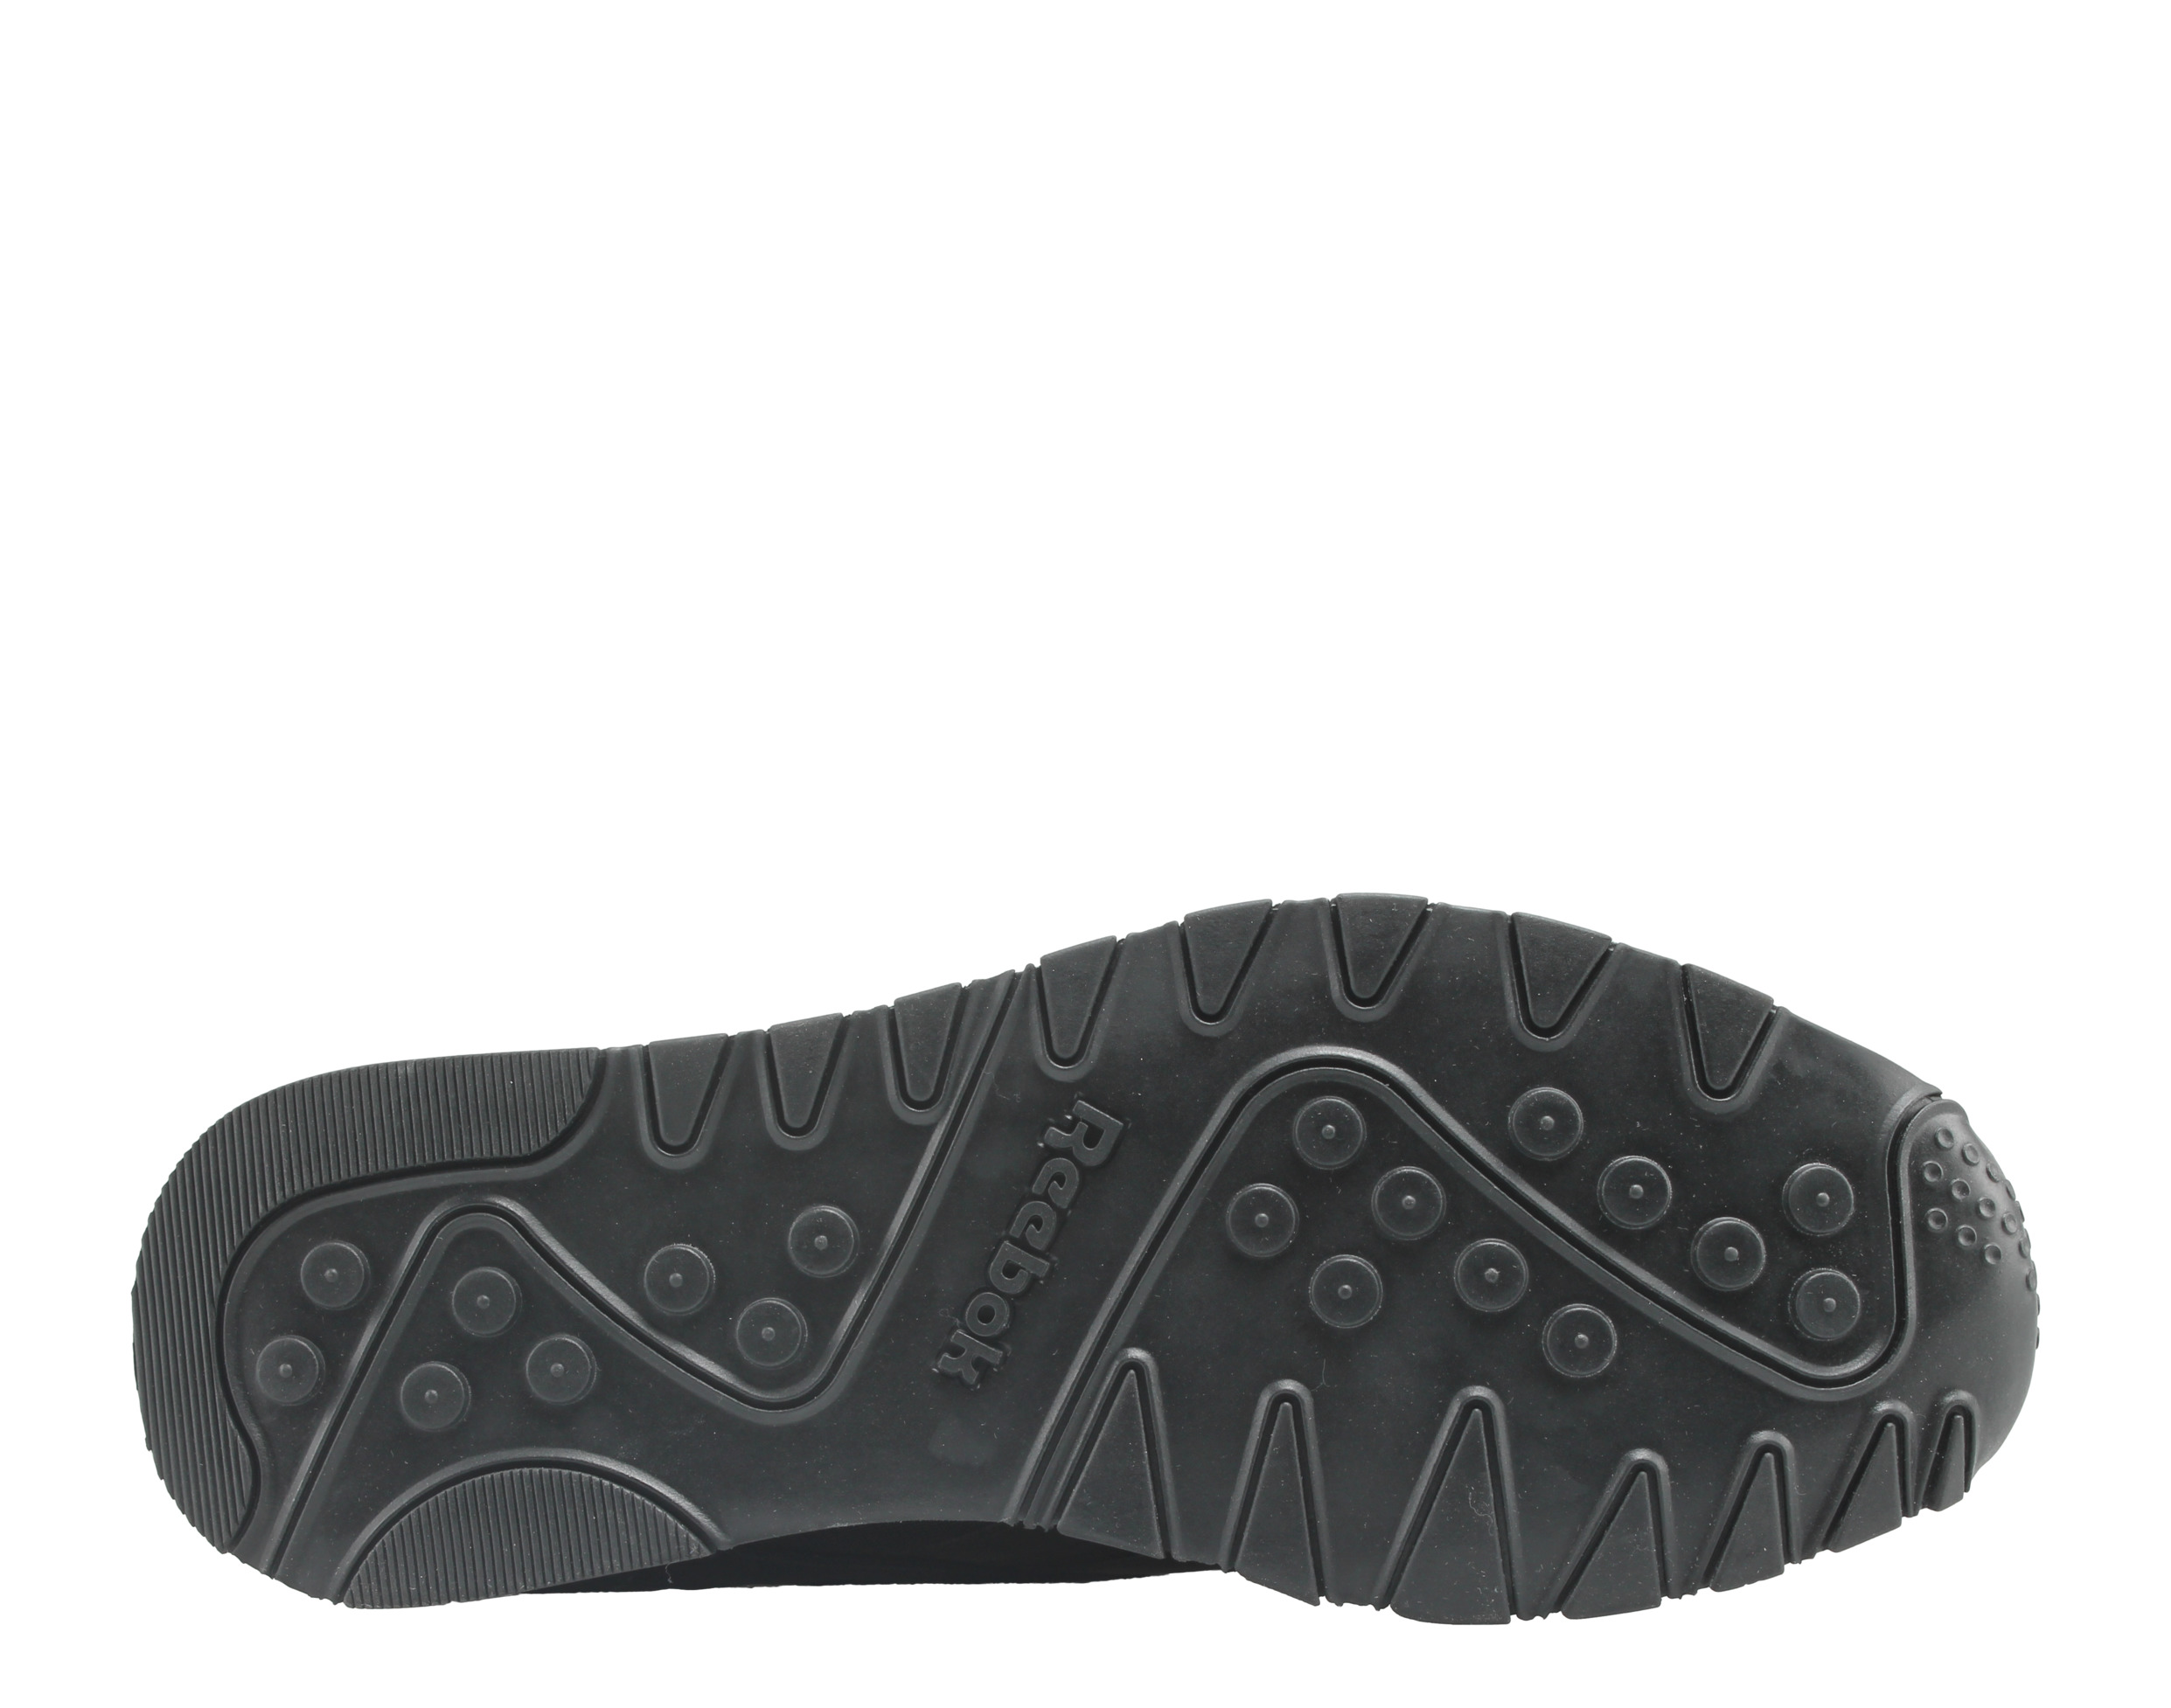 Reebok Classic Nylon Men's Running Shoes Size 12 - image 5 of 6